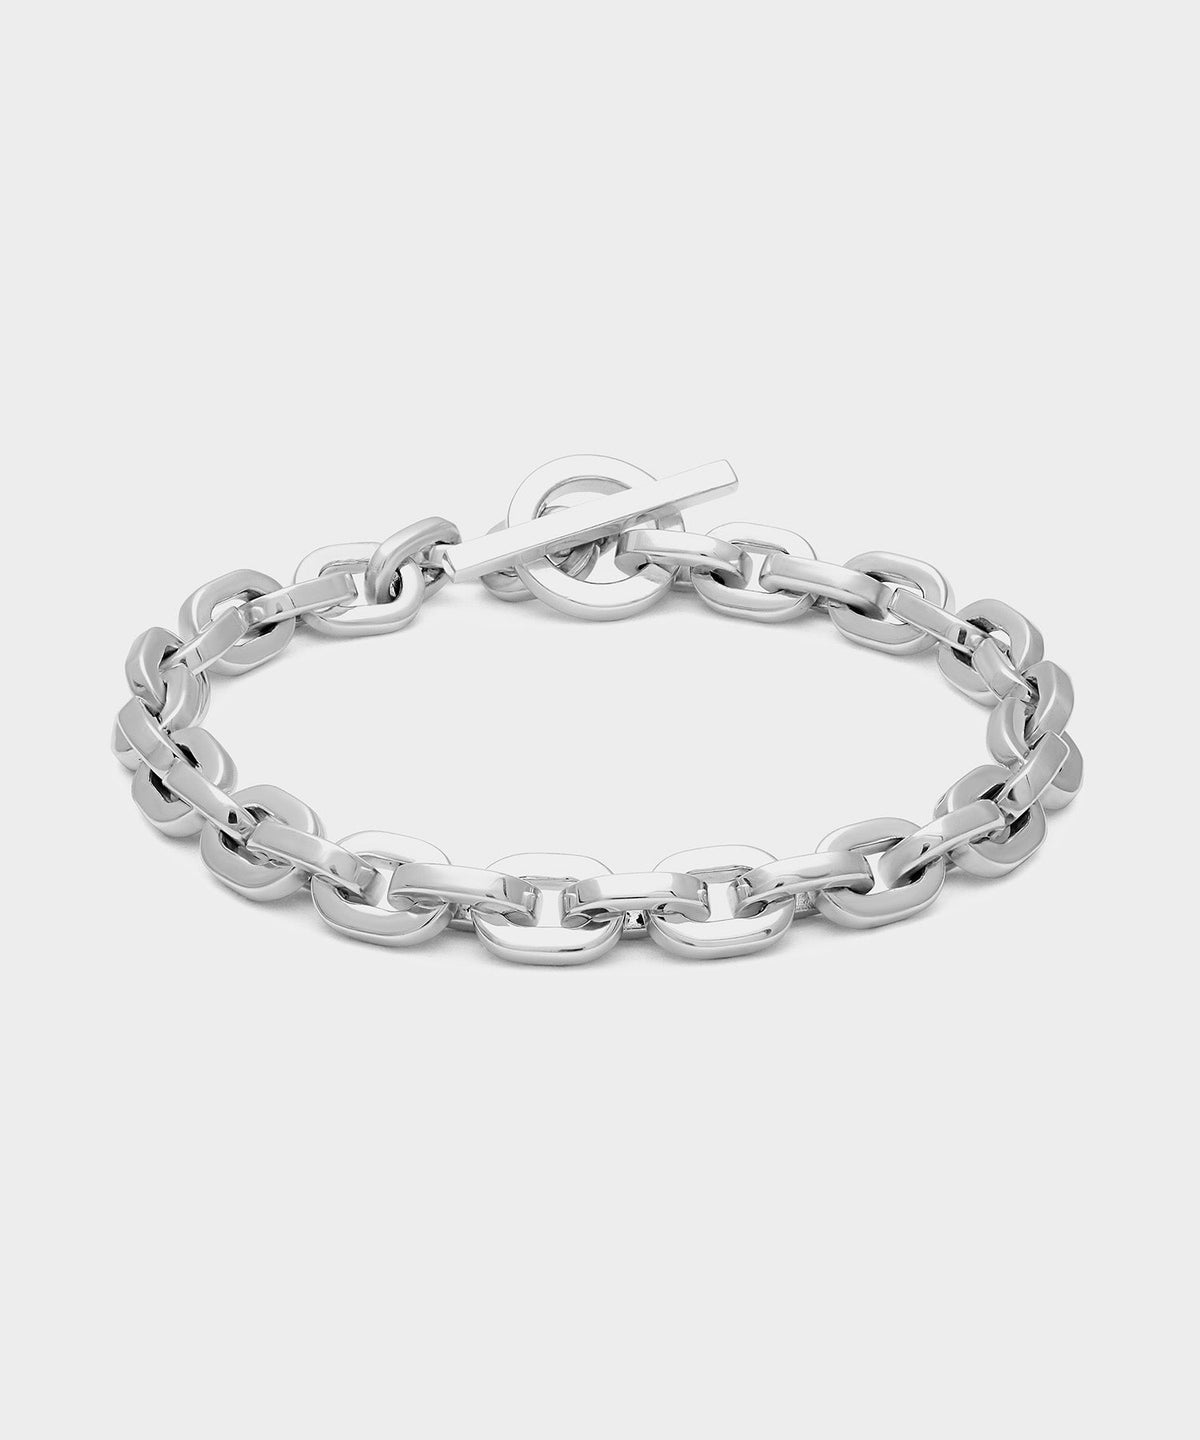 Maor Cuadro Toggle Bracelet in Silver